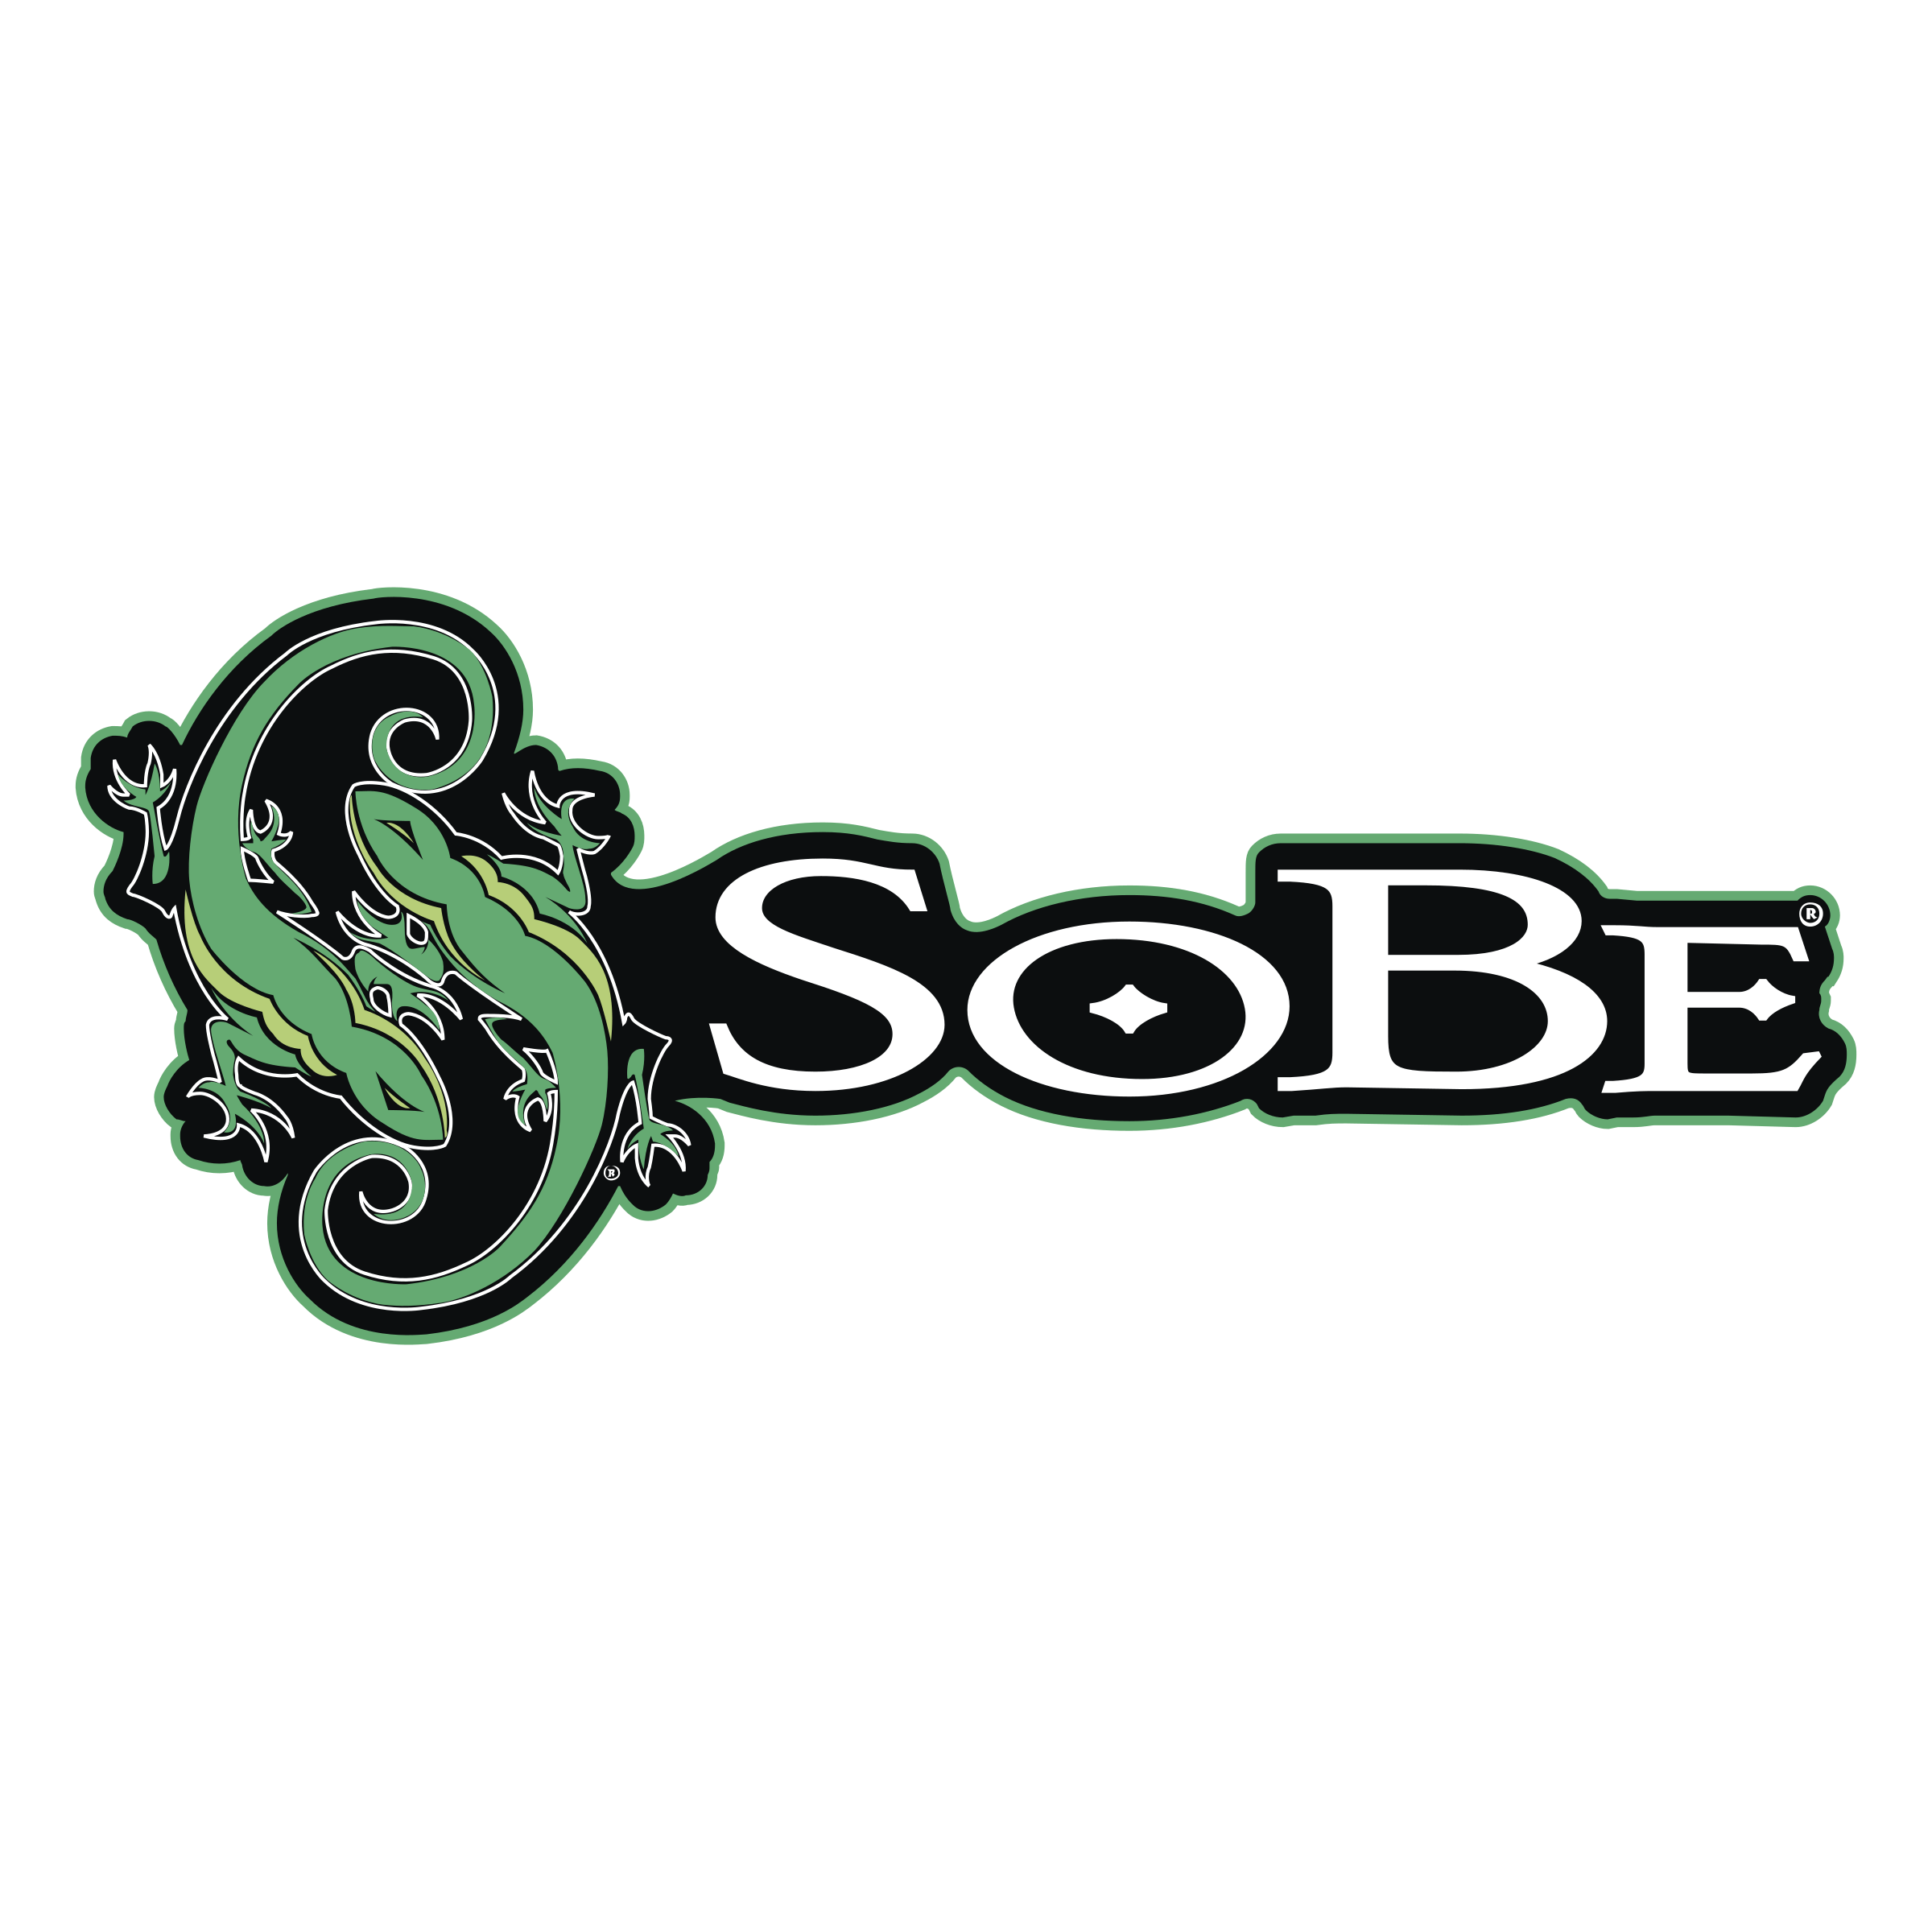 Sobe Logo - SoBe Logo PNG Transparent & SVG Vector - Freebie Supply